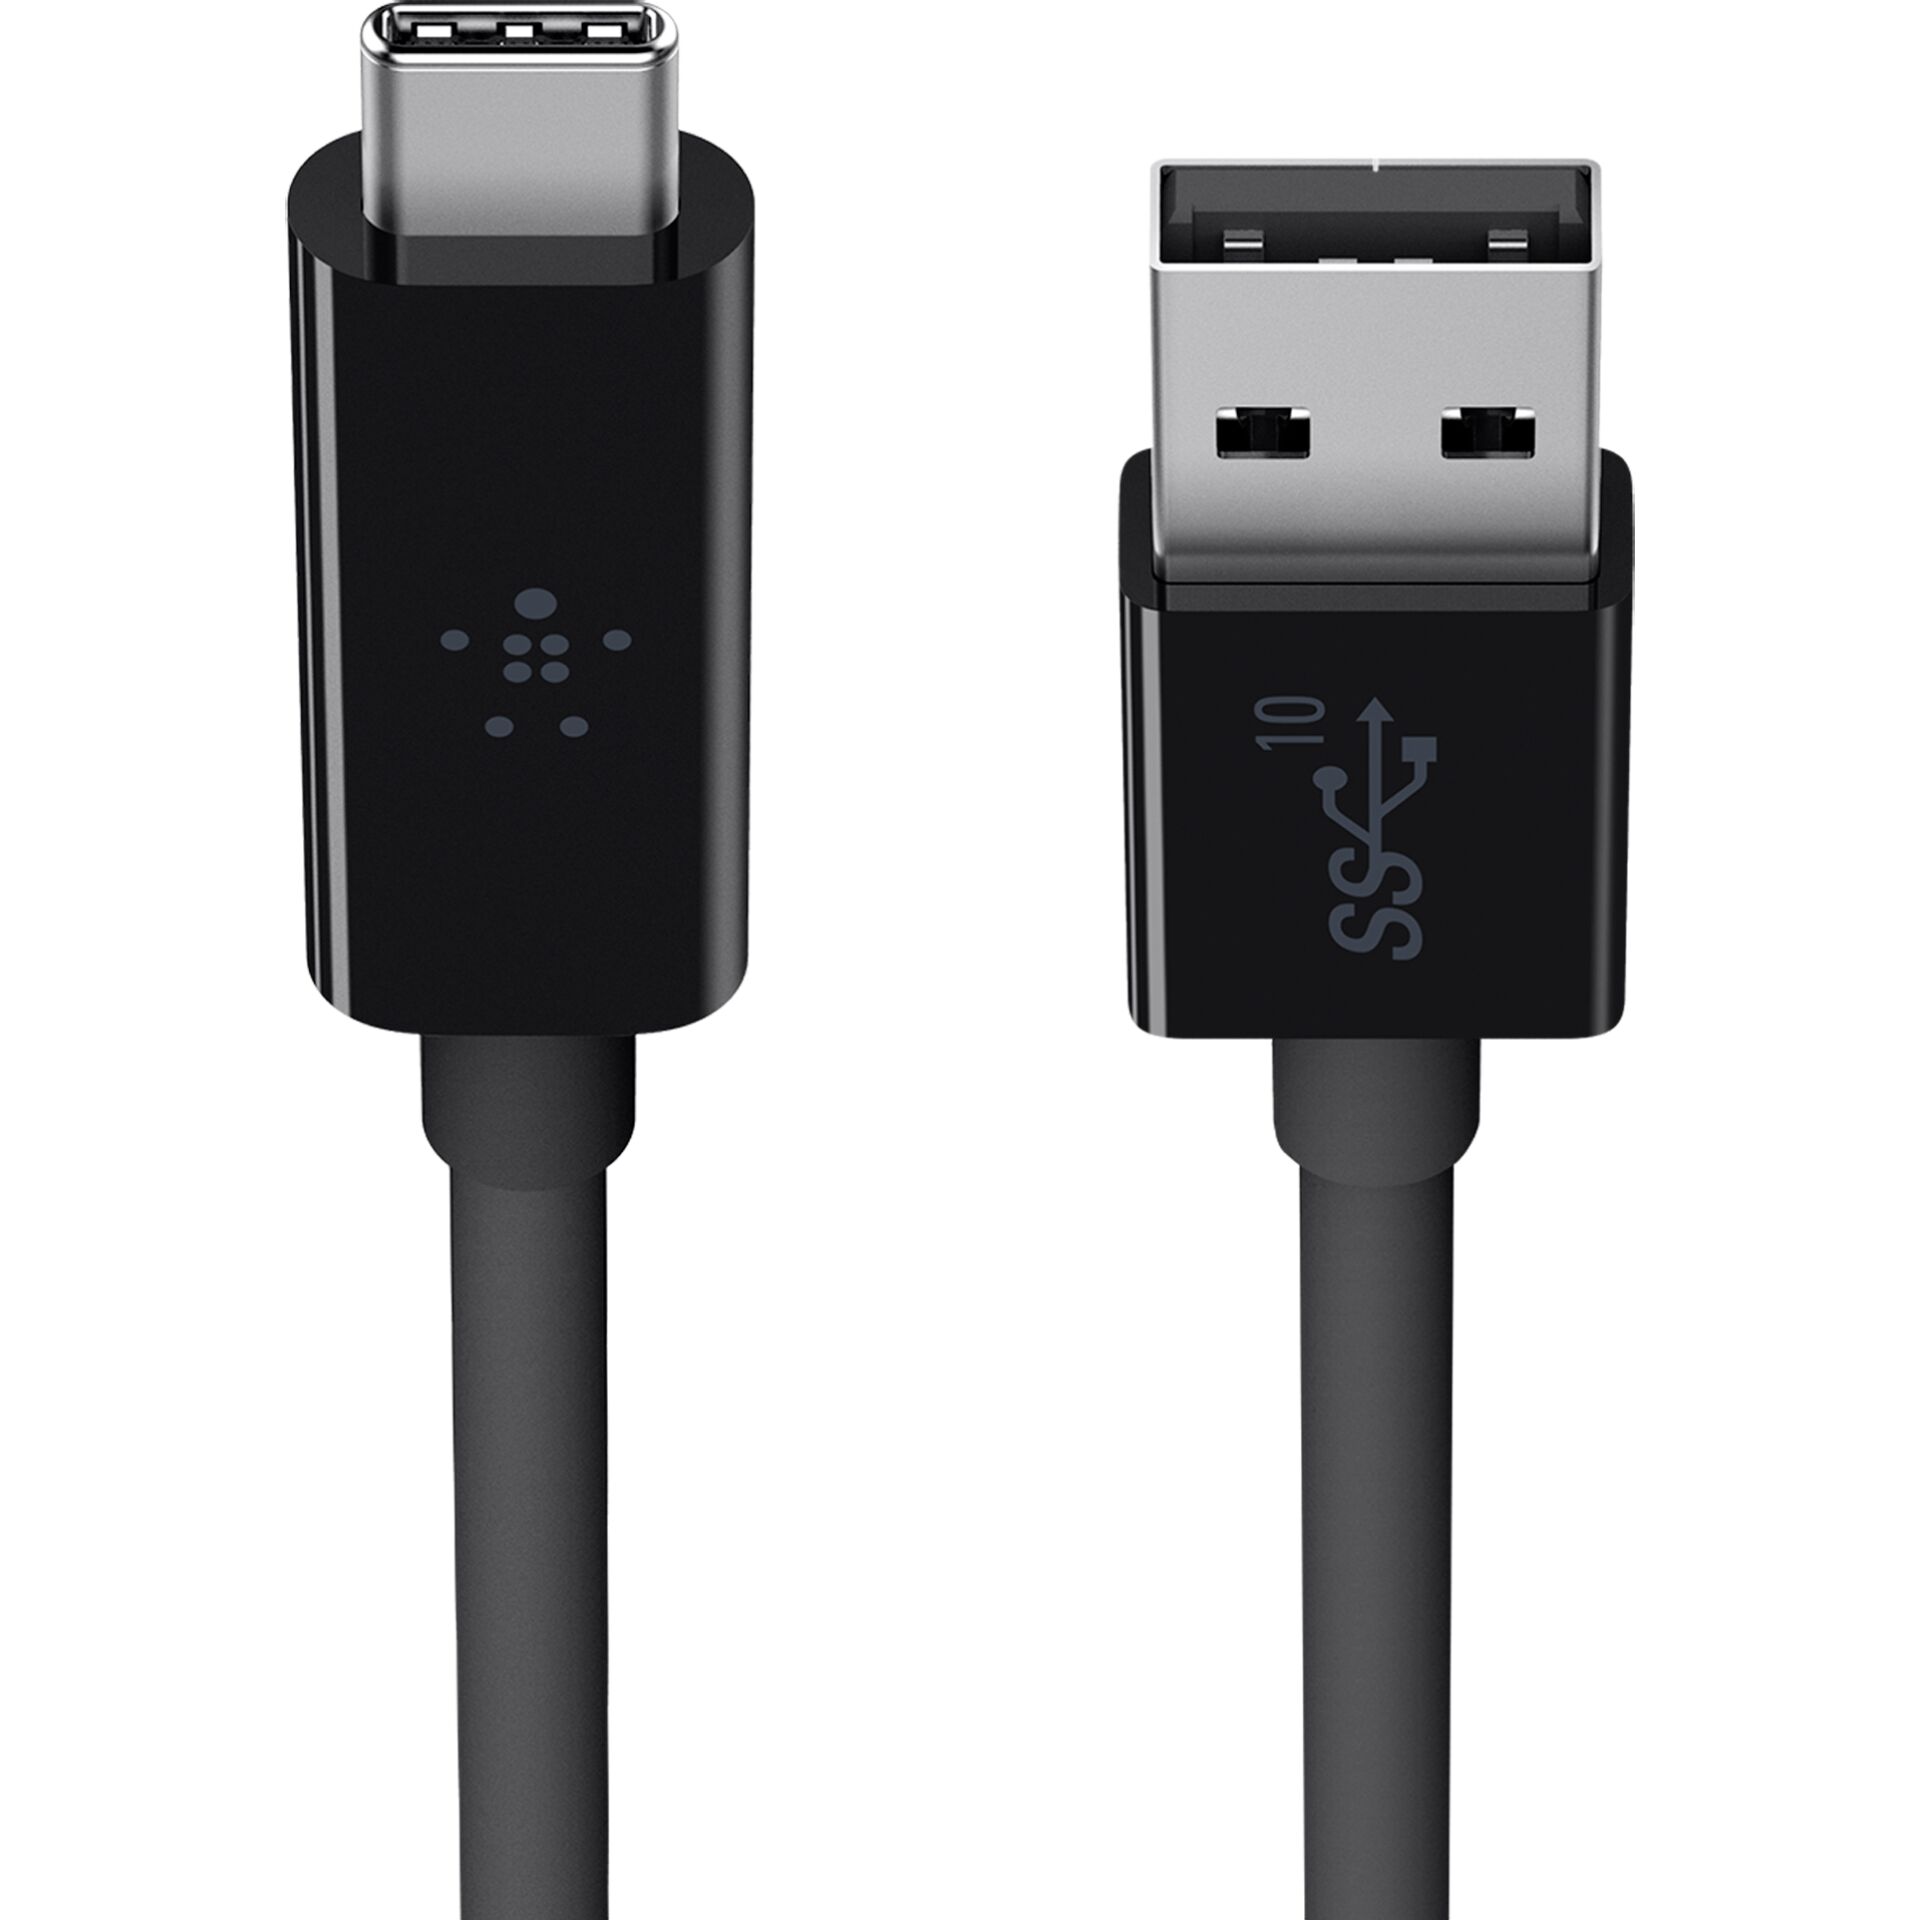 DELOCK Kabel USB 3.0 Typ-A Stecker > USB 3.0 Typ-B Stecker 1m